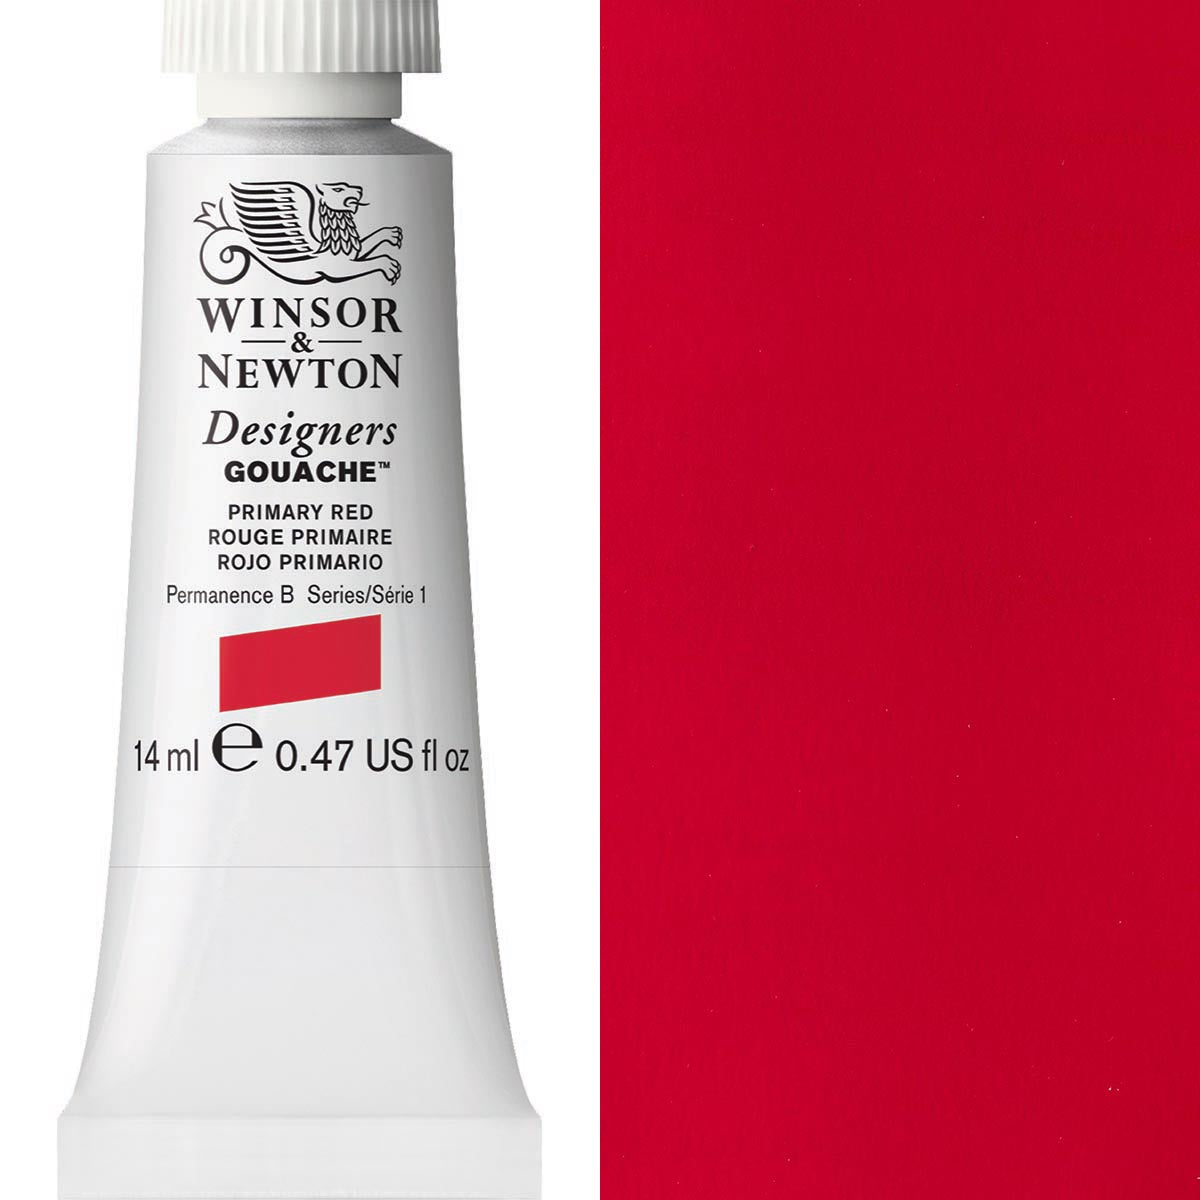 Winsor & Newton : Designer Gouache Paint : 14ml : Flame Red